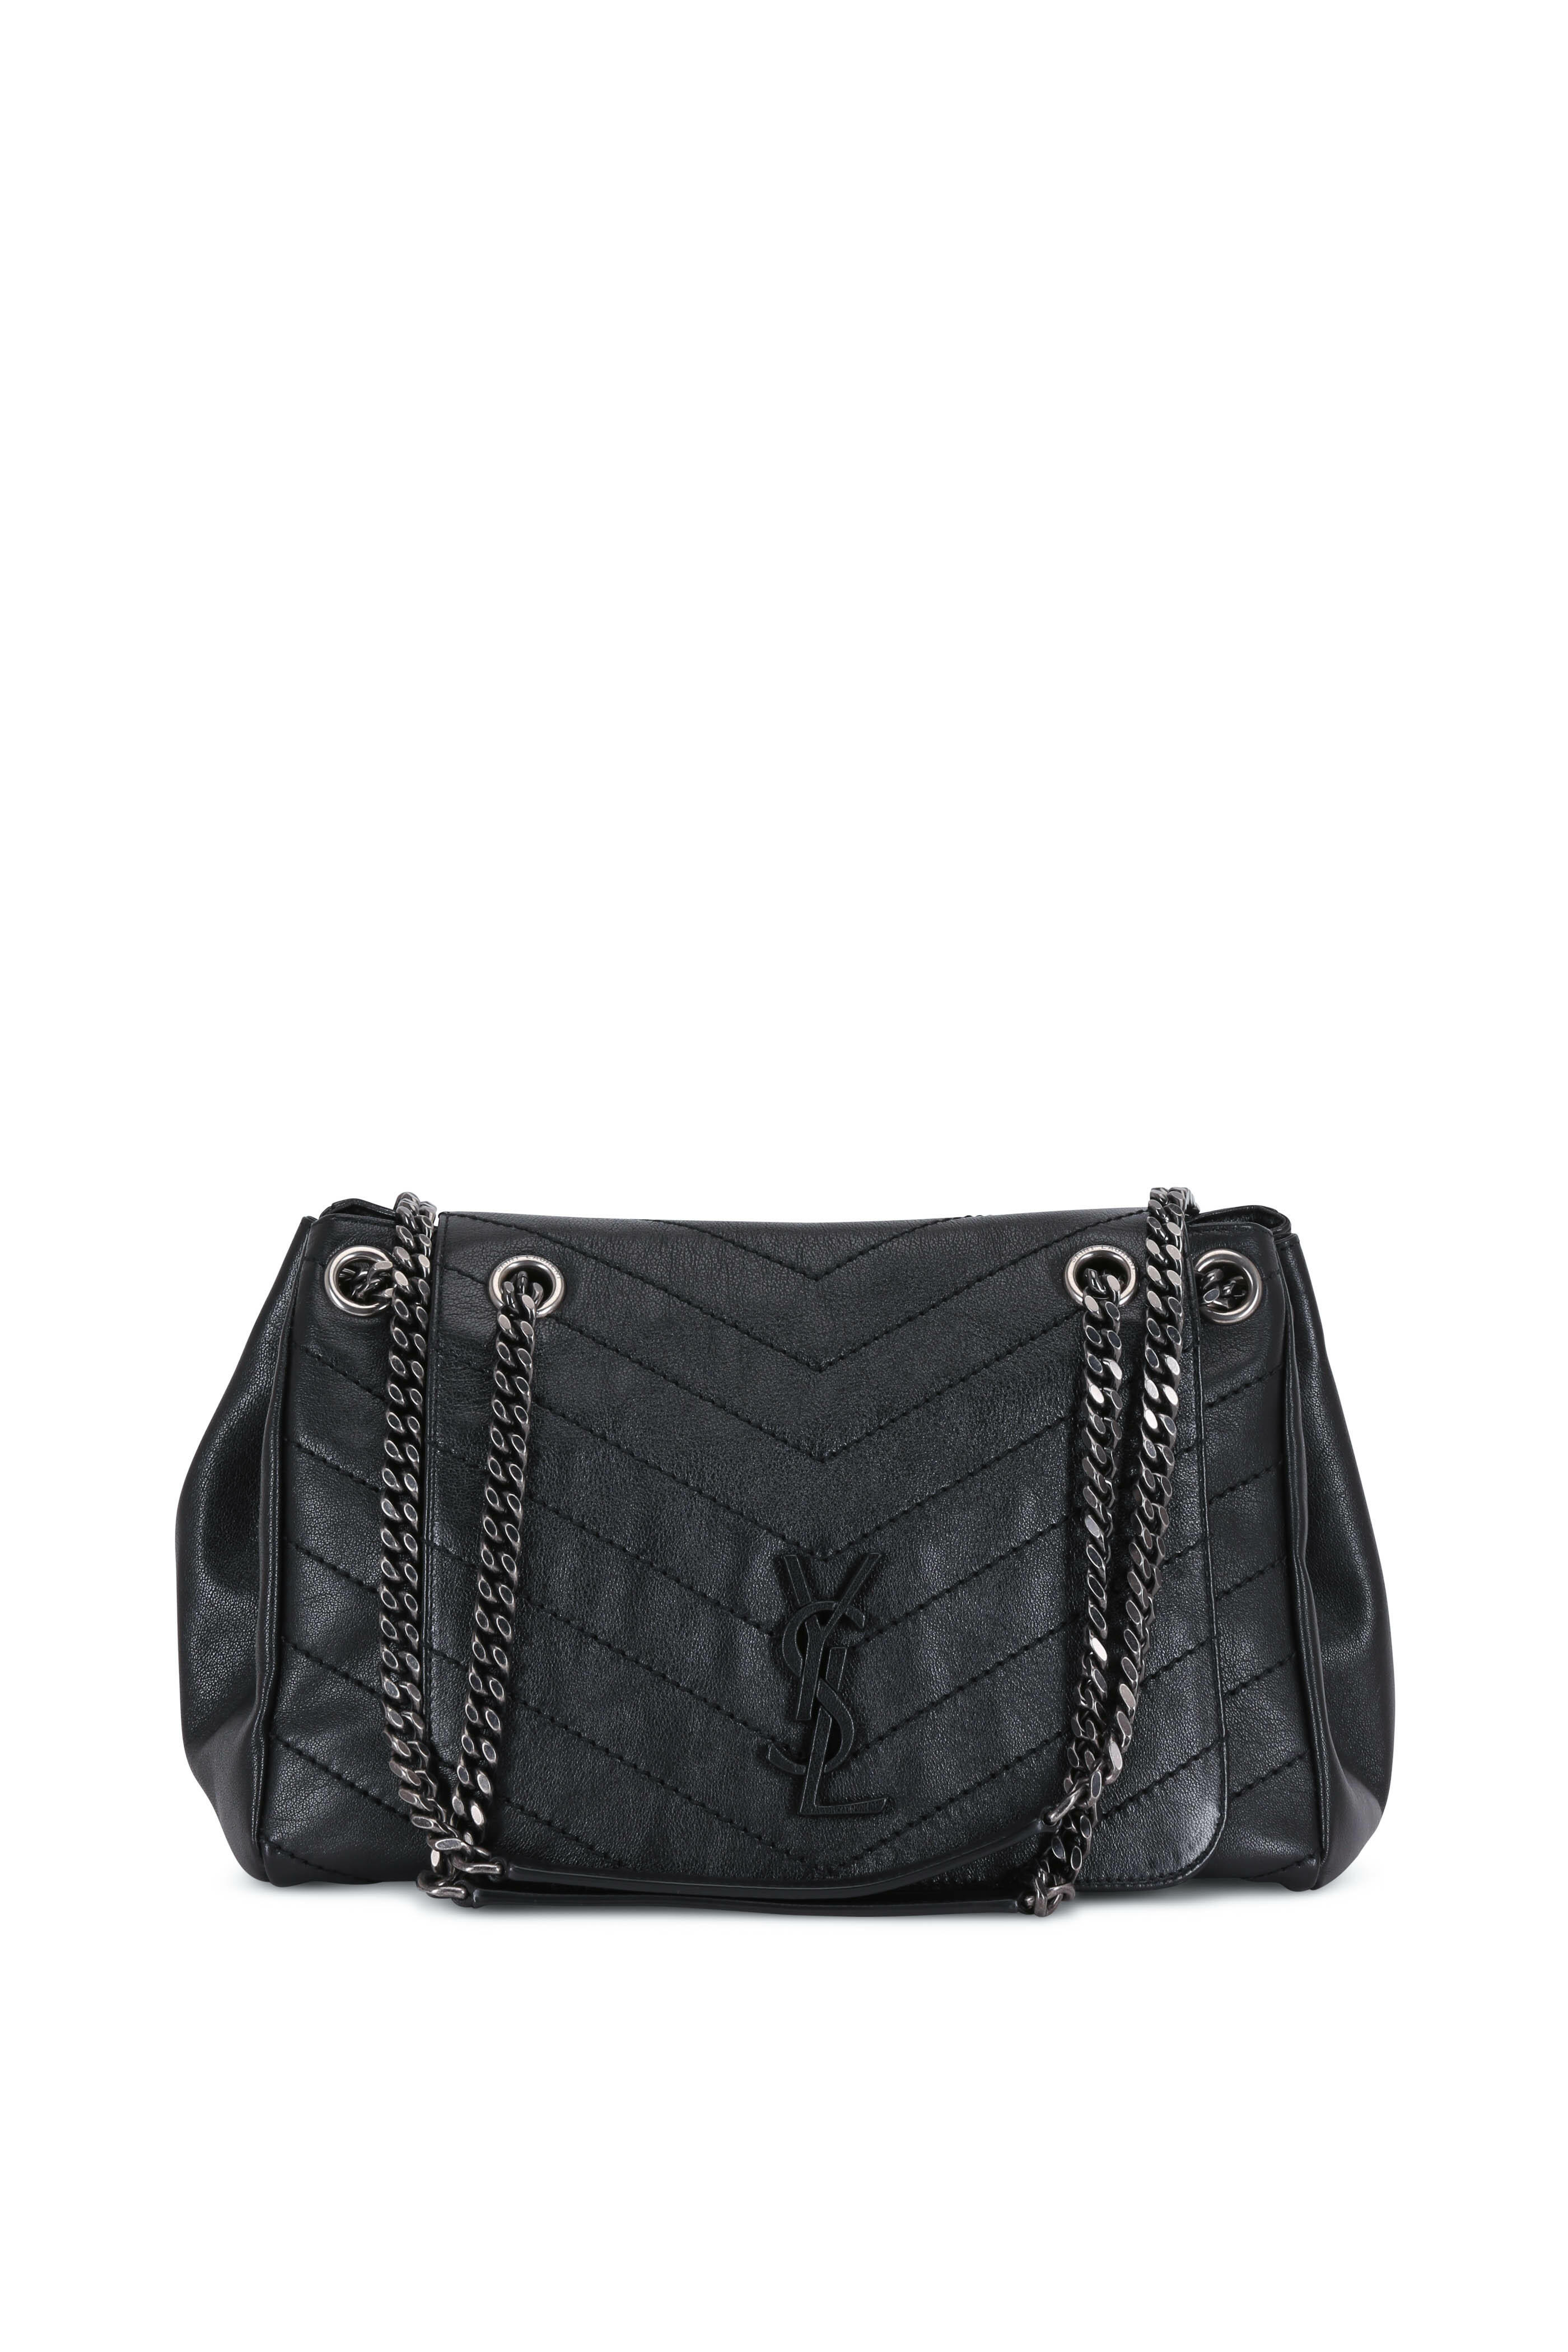 Yves Saint Laurent Leather Nolita Crossbody Bag Black Gold